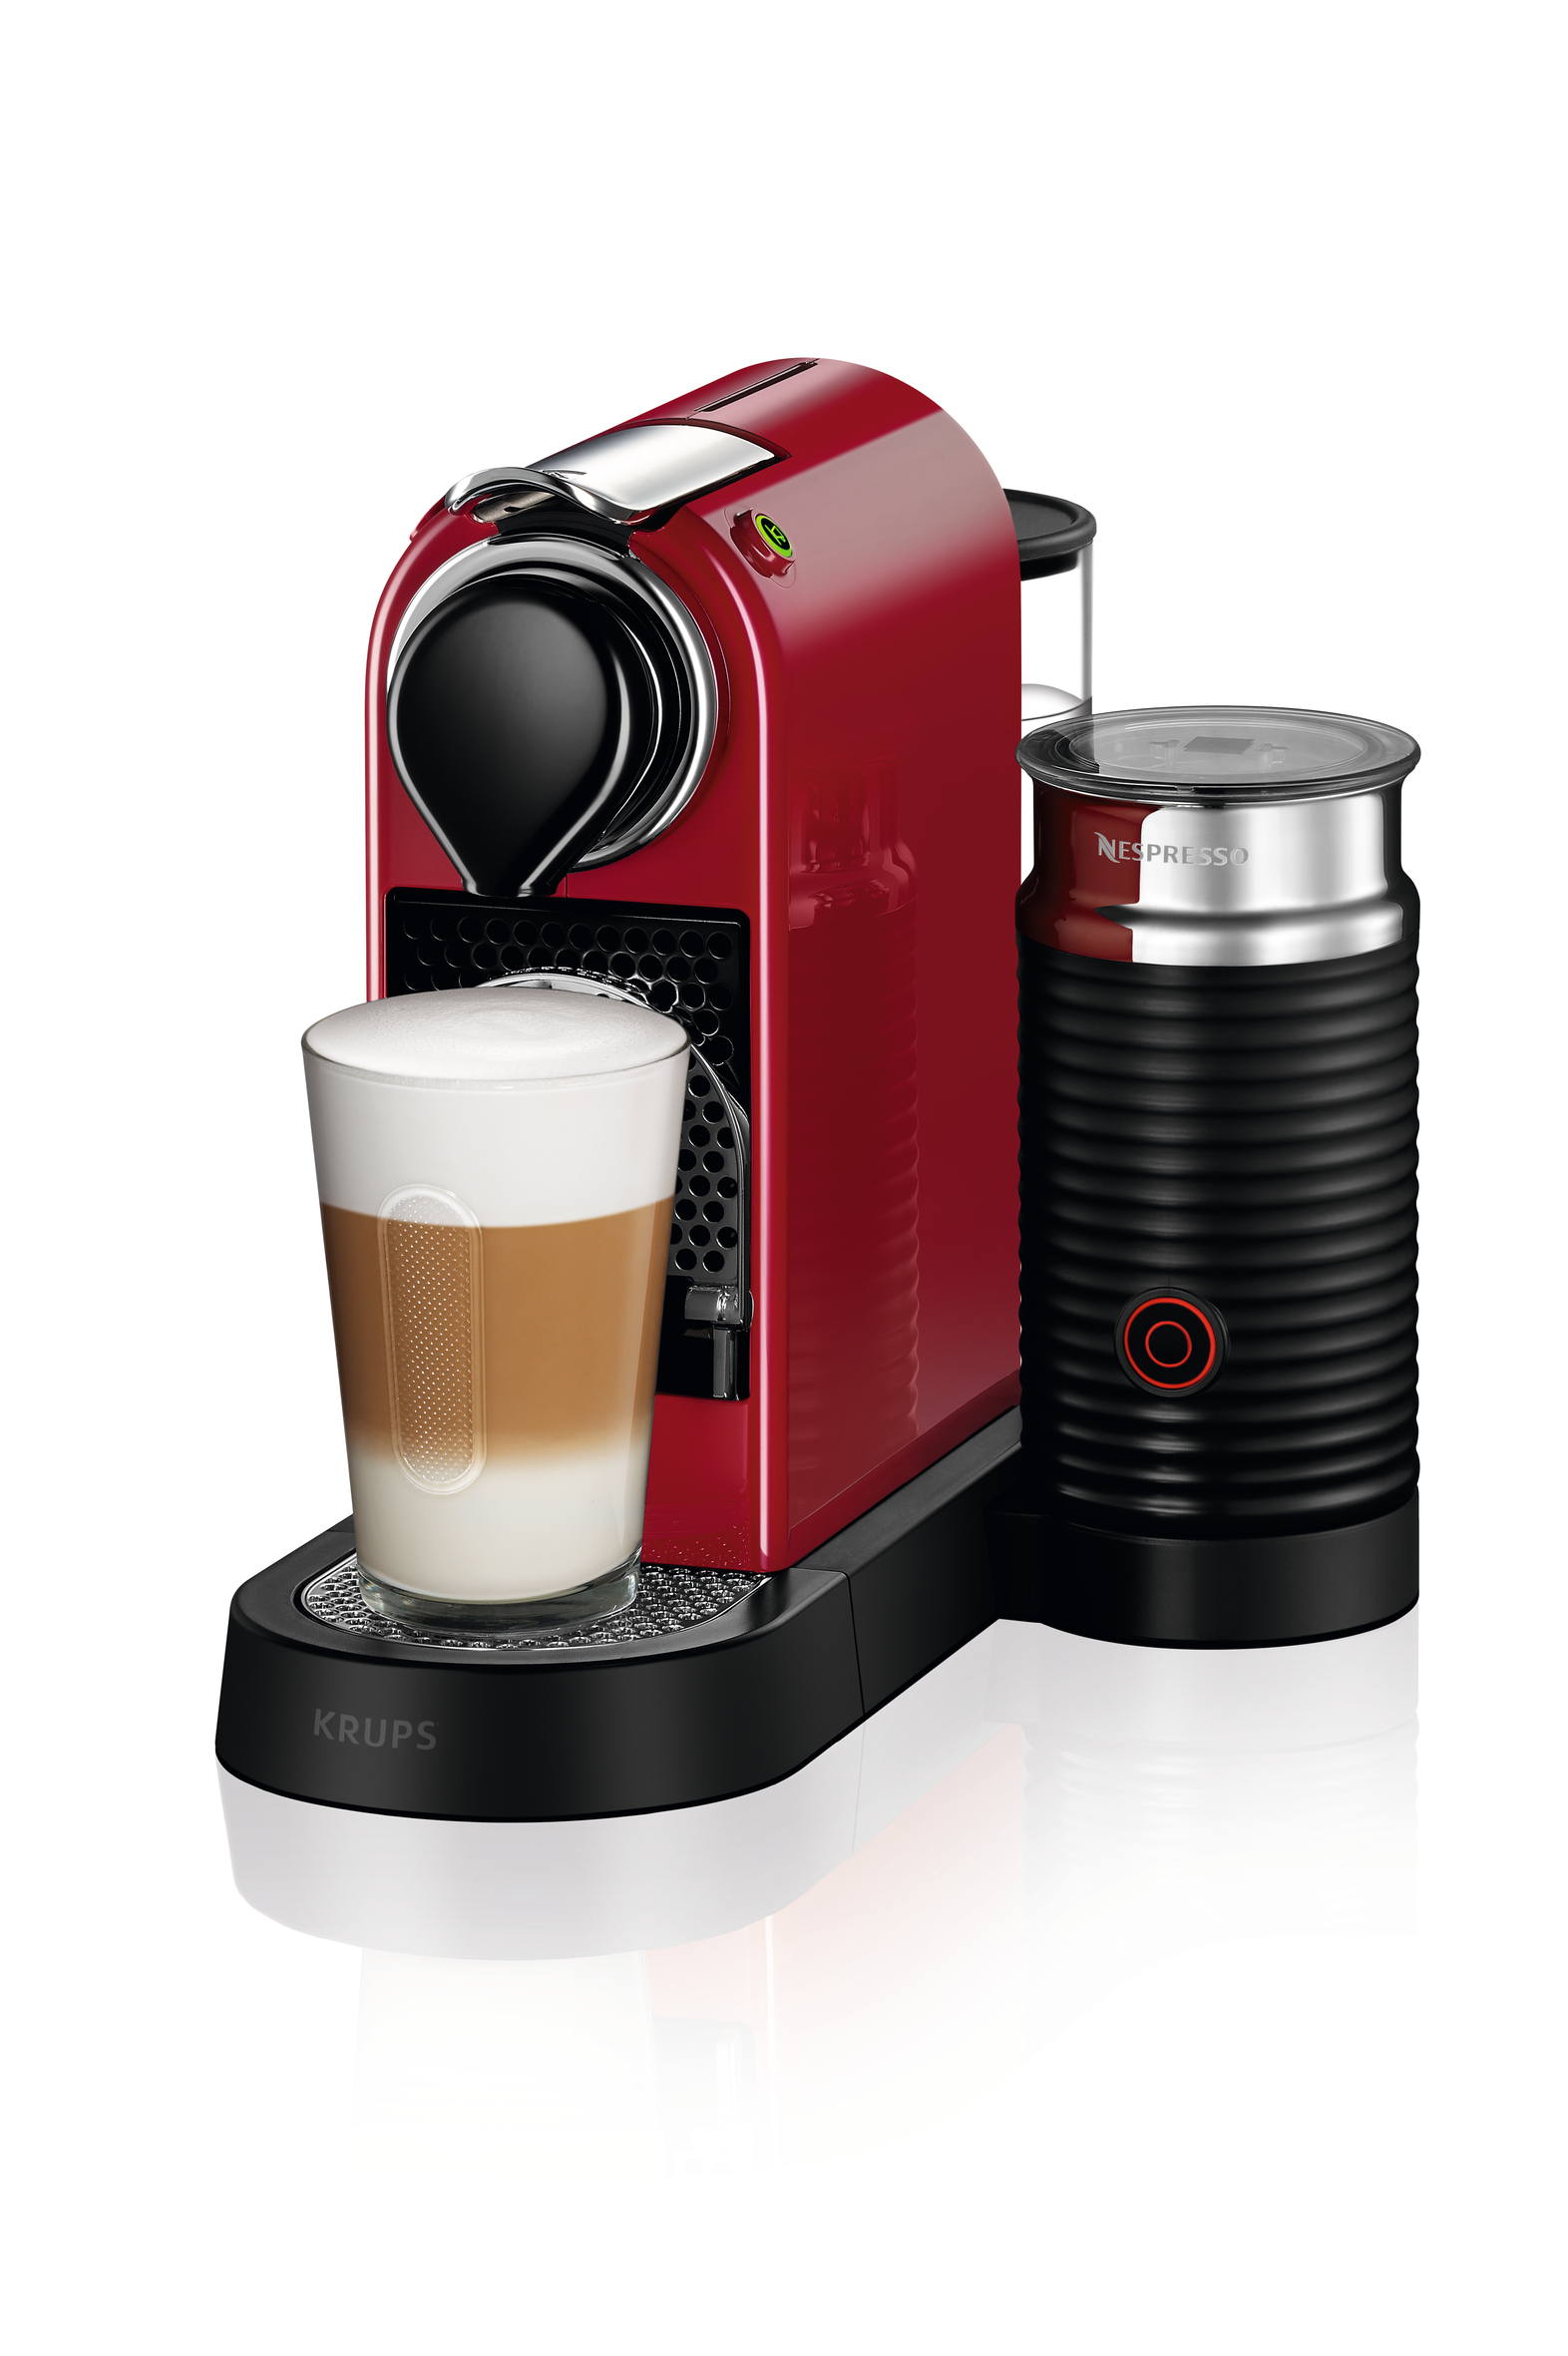 Krups Nespresso XN7615 coffee maker